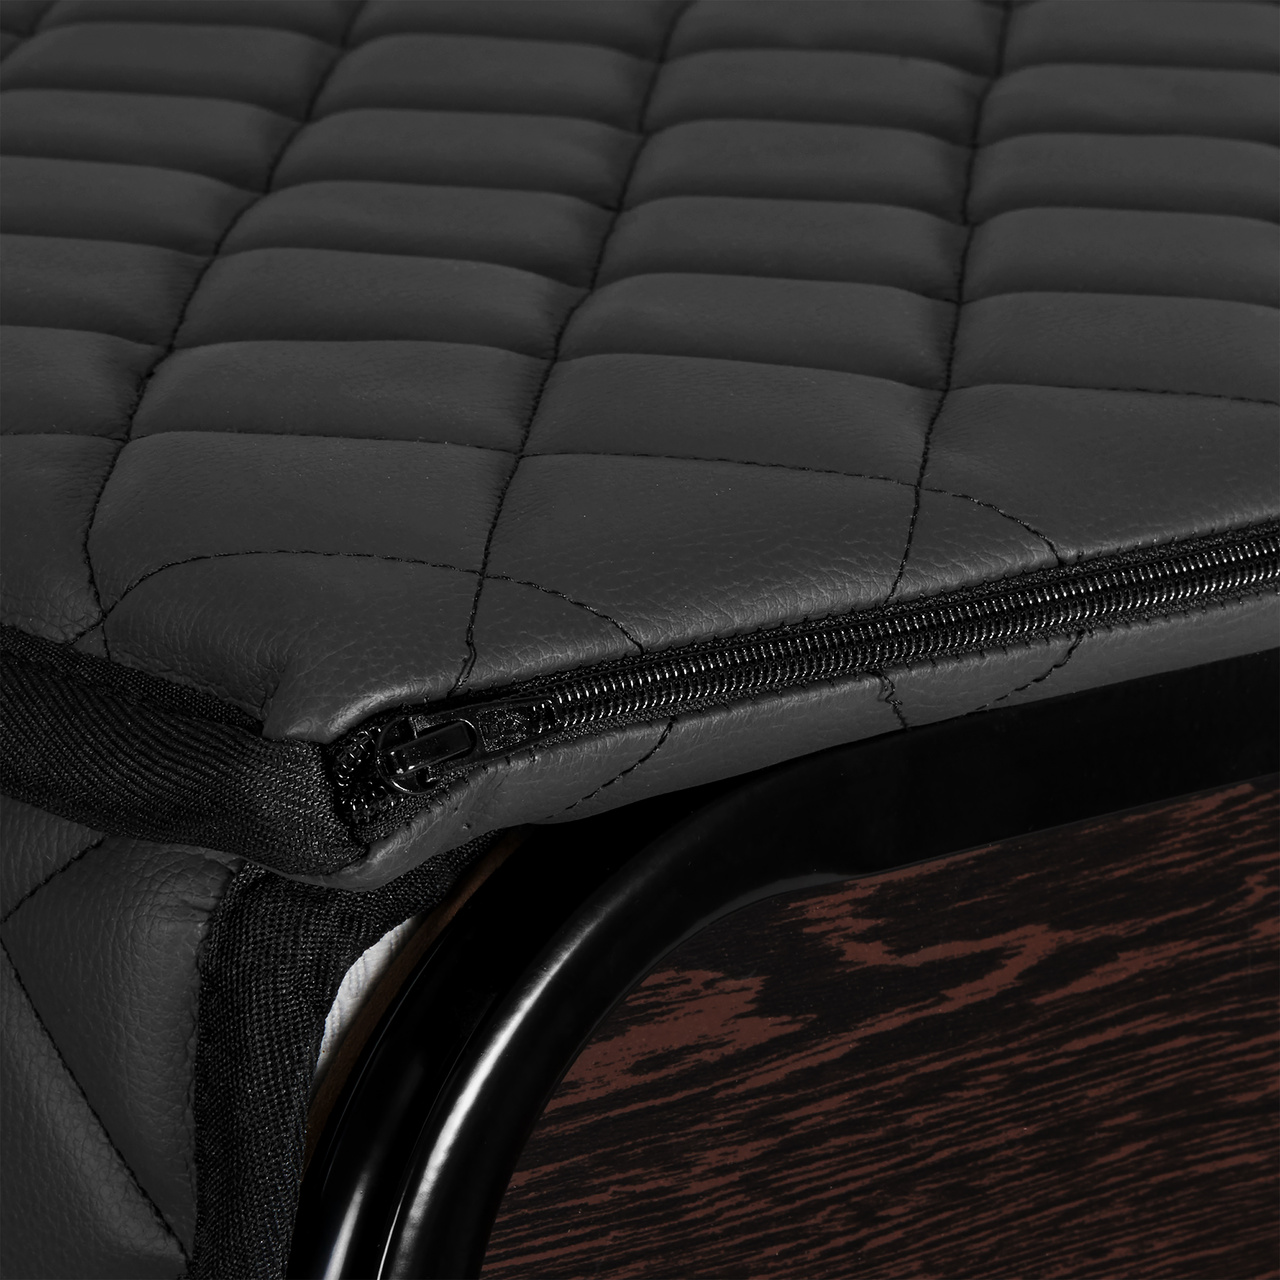 Ritz rollaway folding bed - PU leather